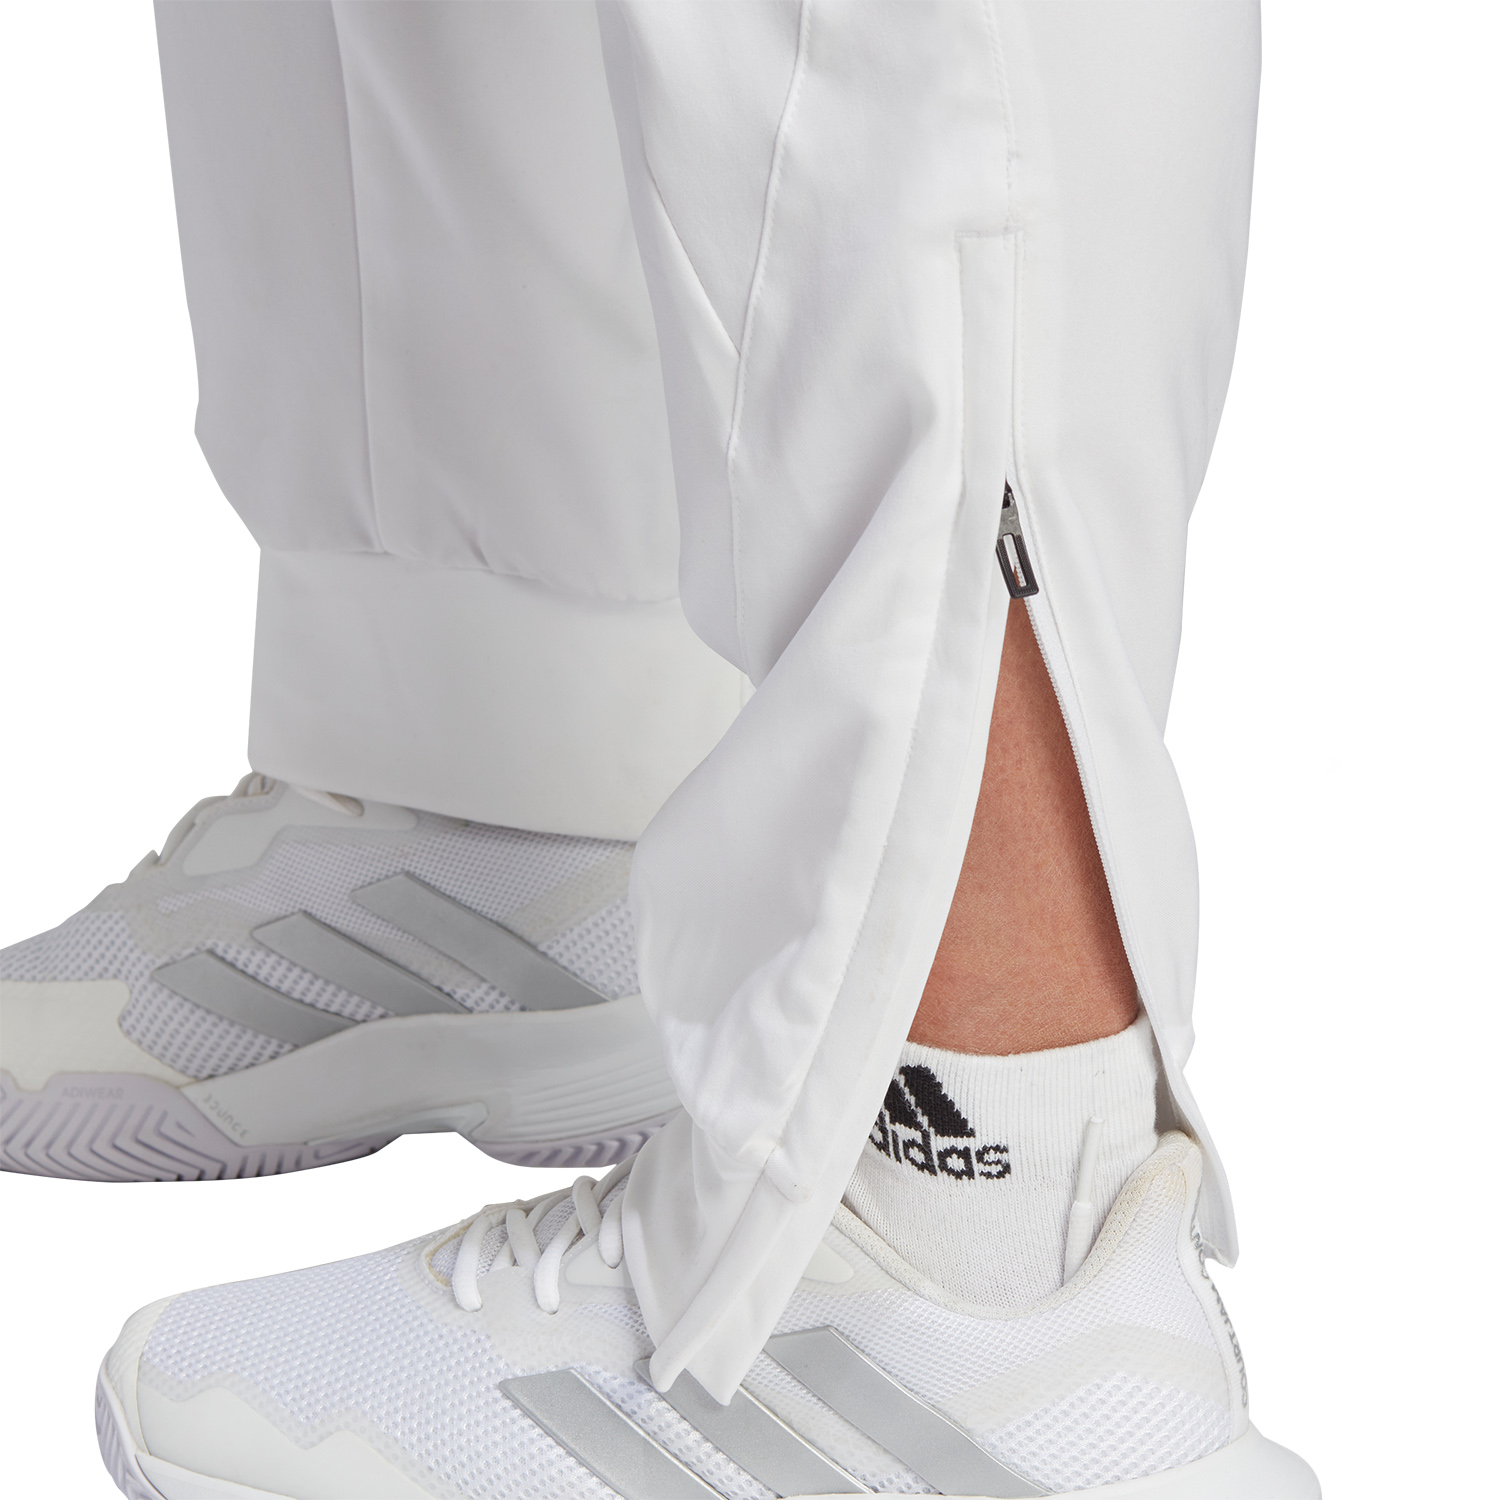 adidas Woven Pro Pantalones - White